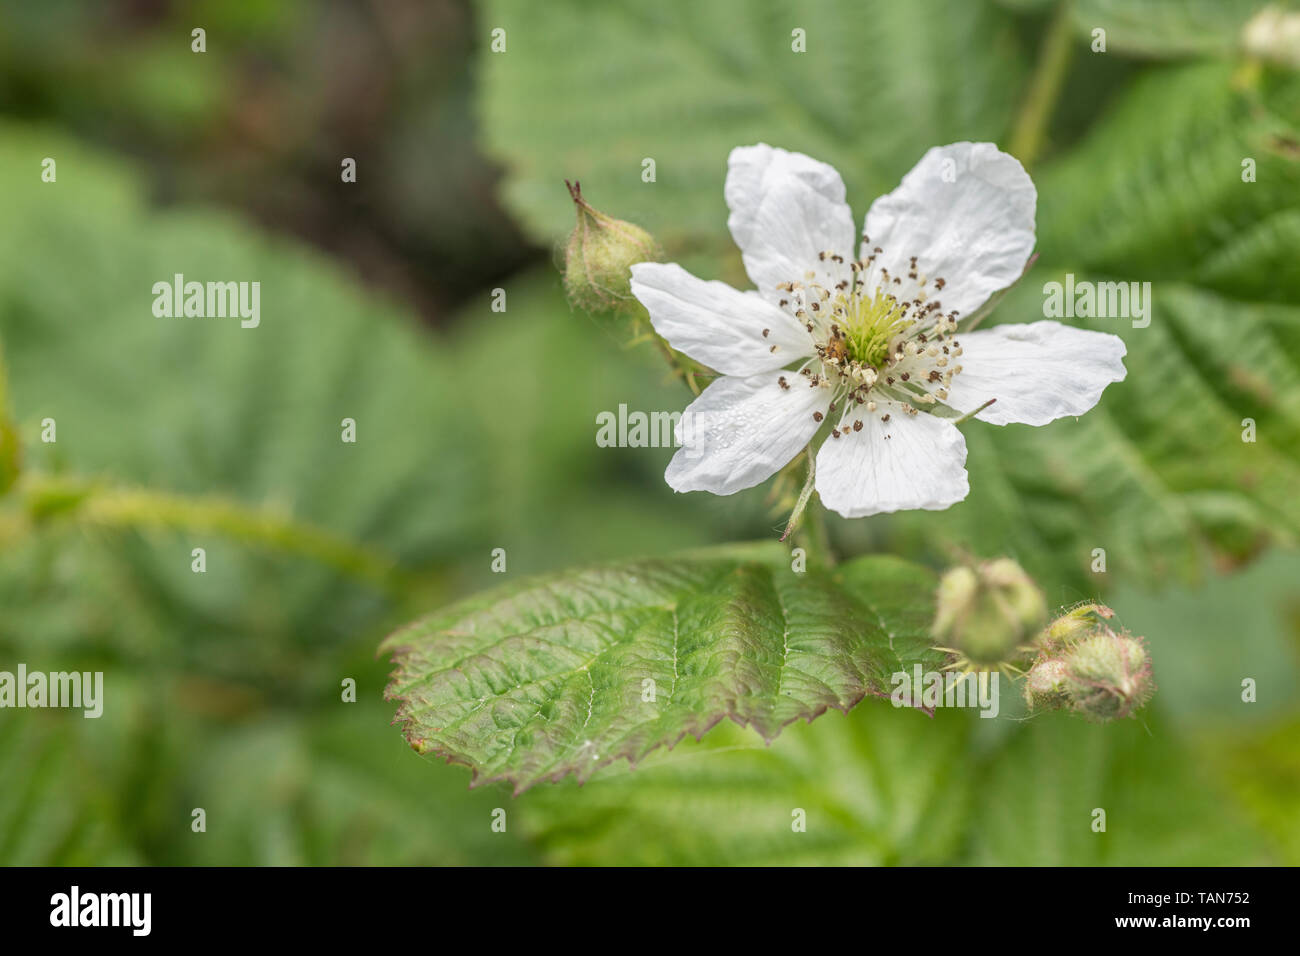 Macro close-up of solitary white flower of Bramble / Rubus fruticosus. Metaphor blackberries as food. Stock Photo